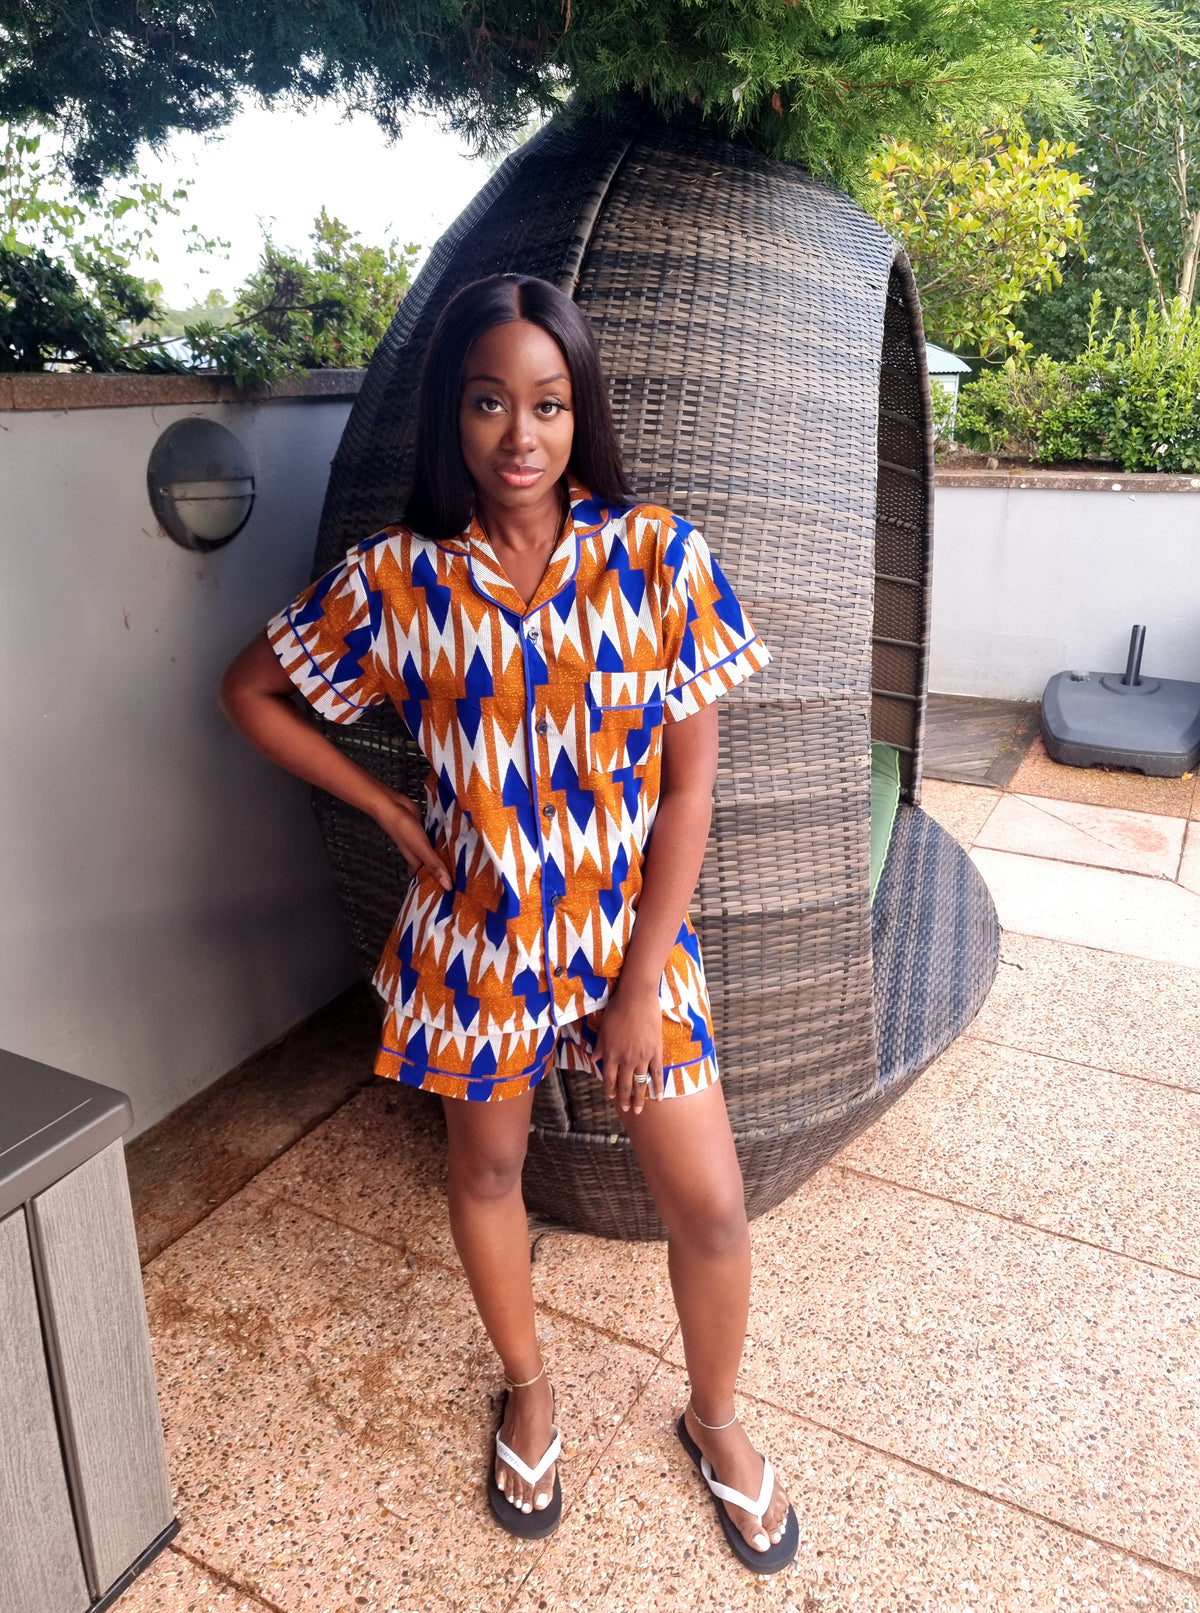 Teeno Loungewear: African Print Loungewear and Accessories